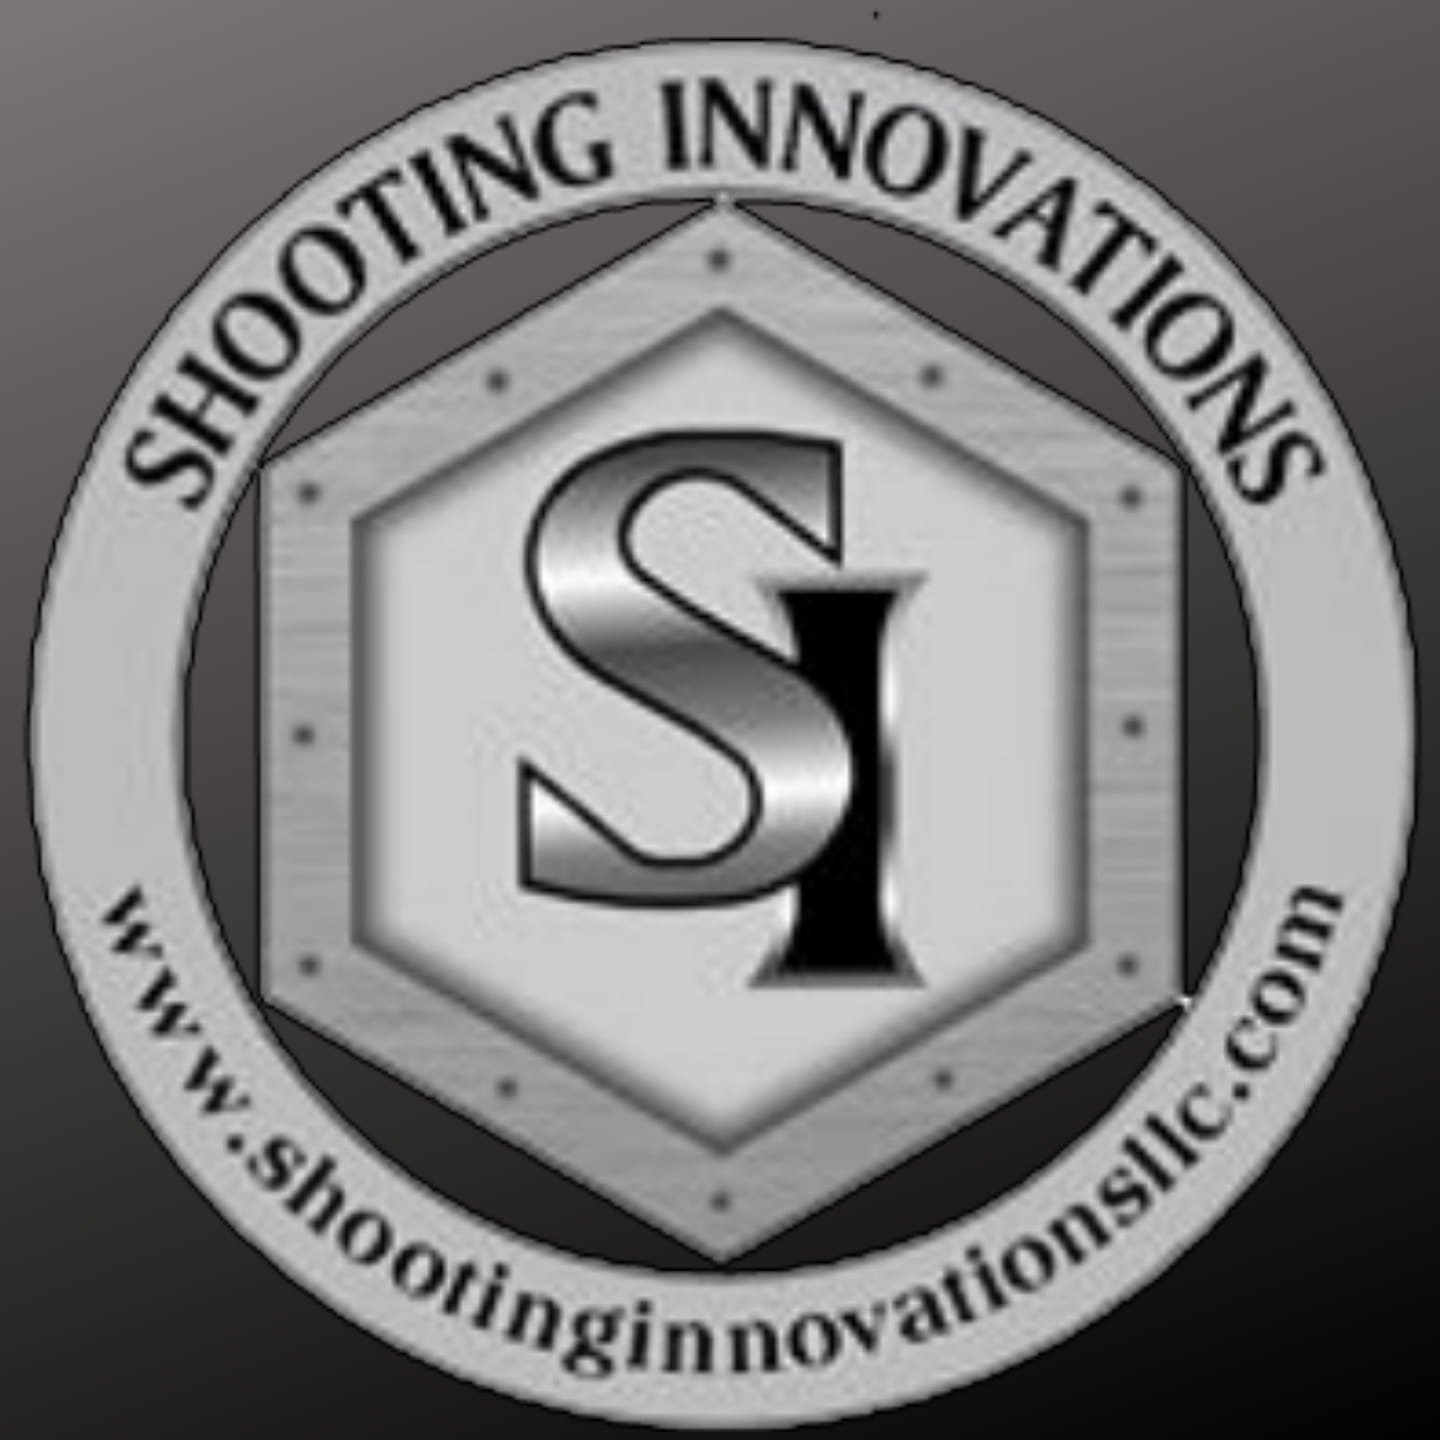 Shooting Innovations